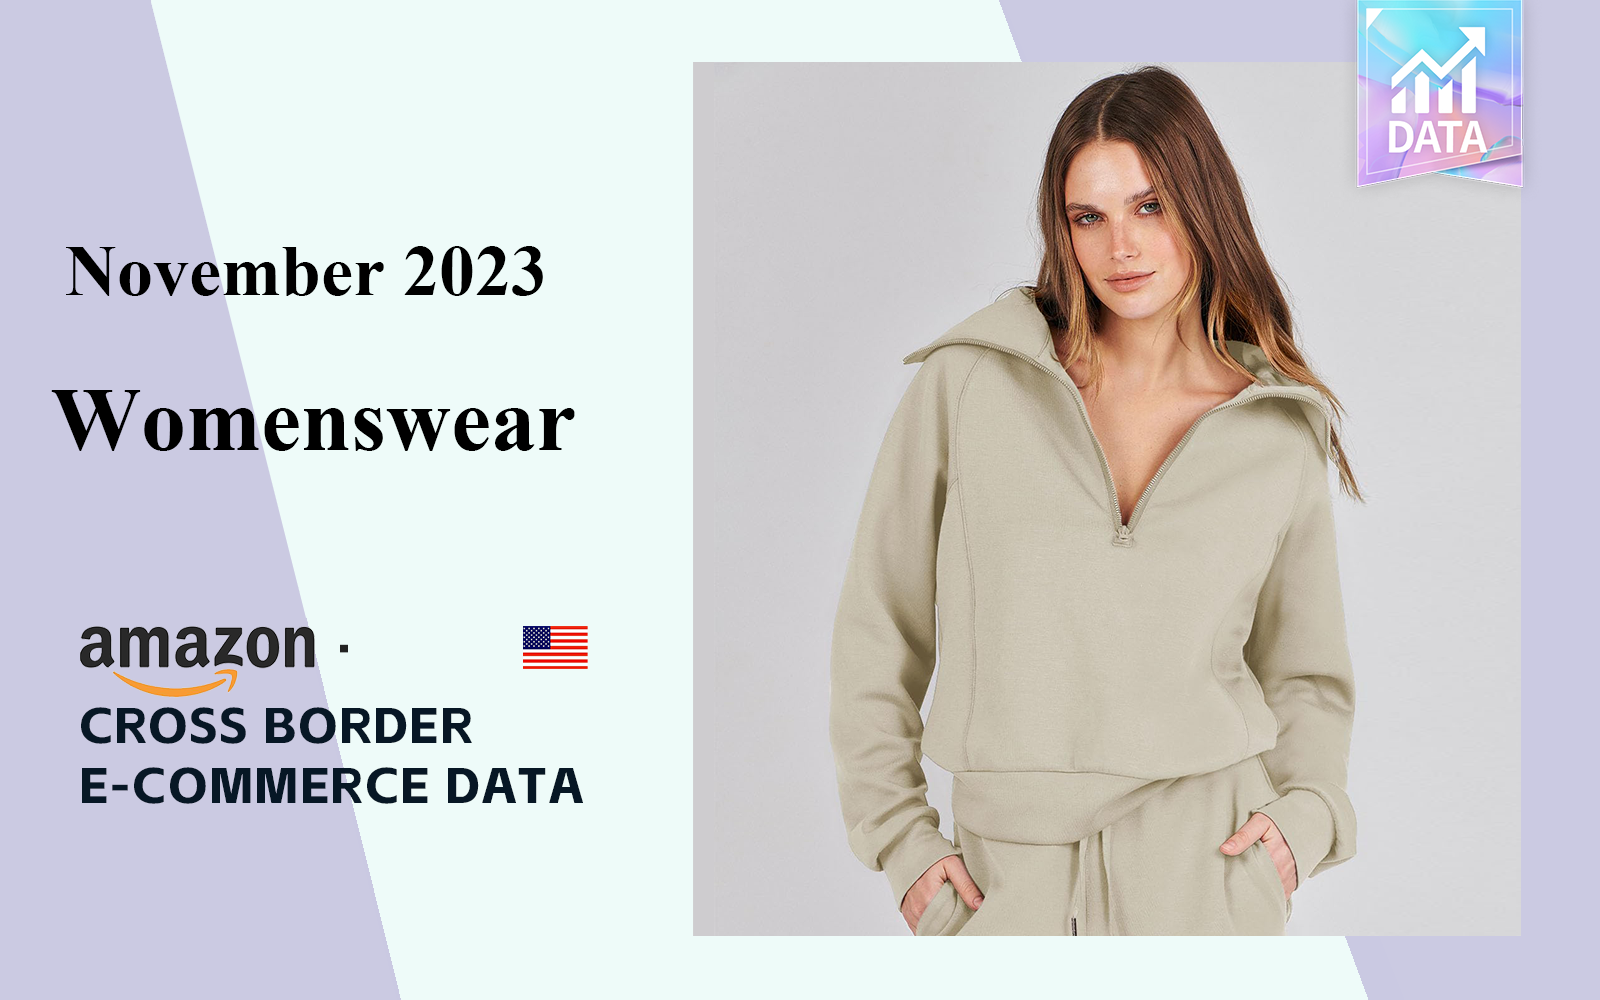 The Data Analysis of Cross-Border E-Commerce Womenswear in November